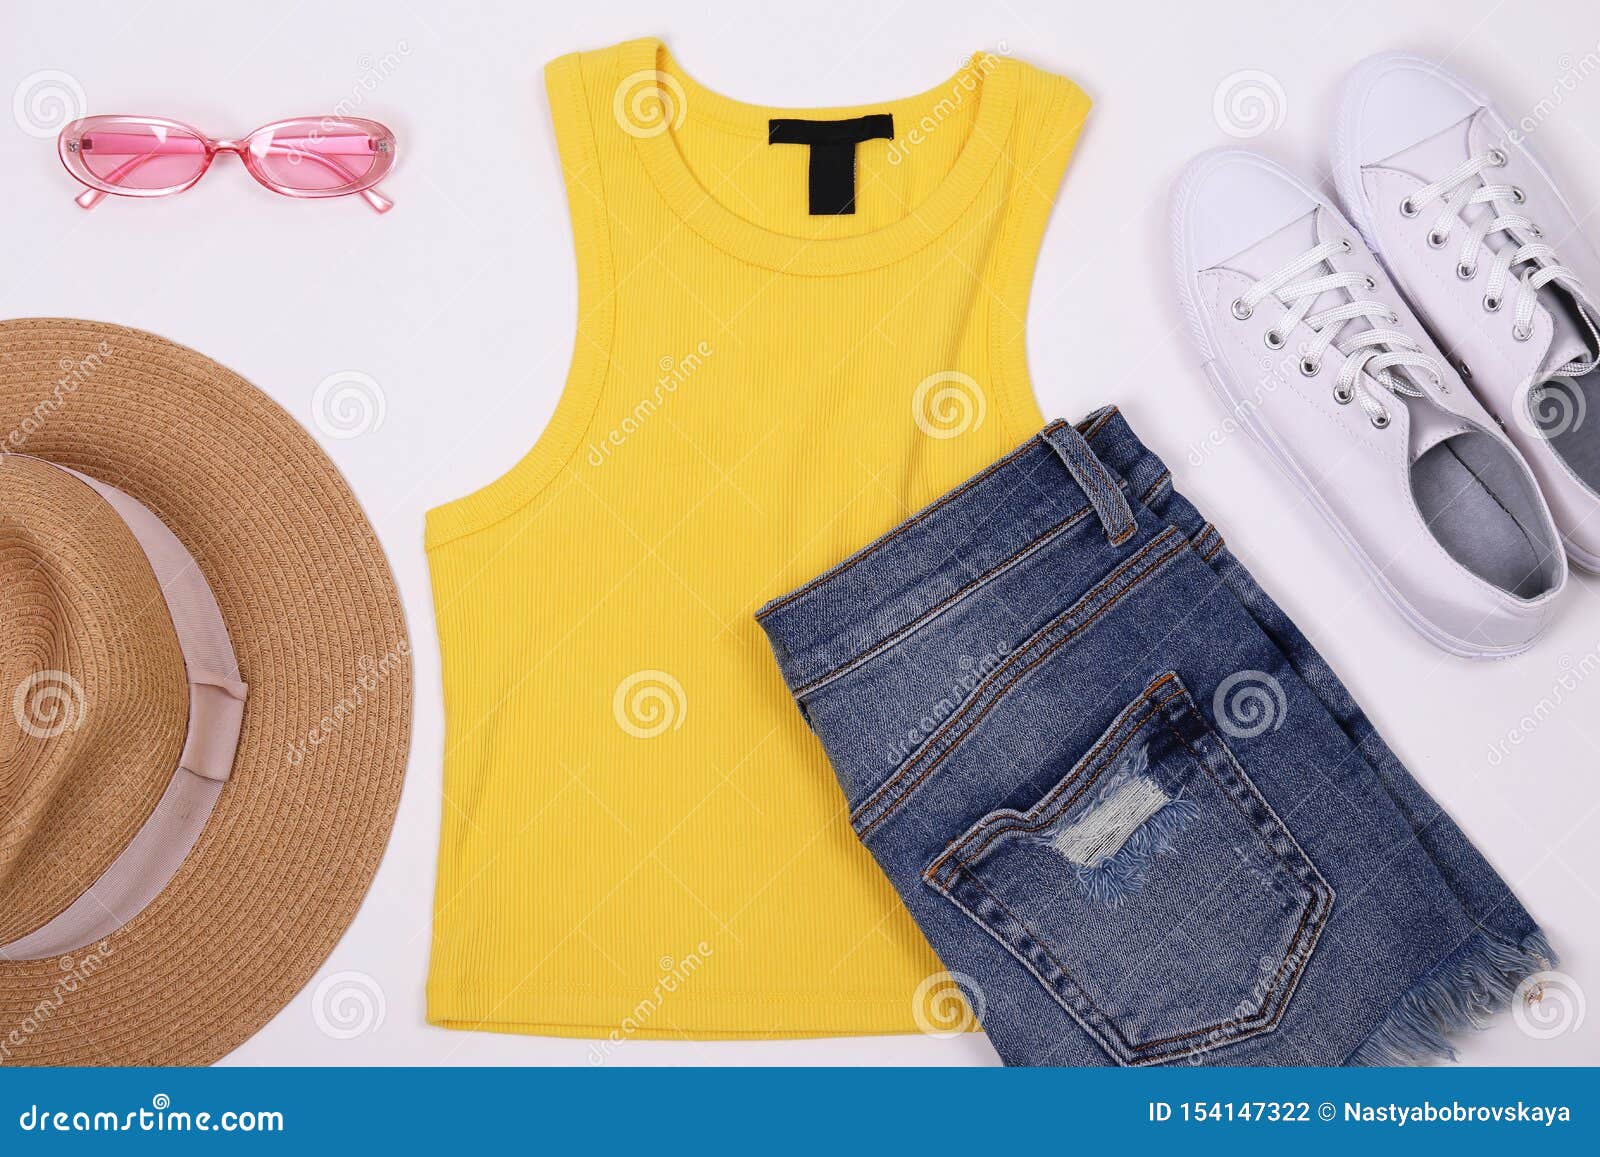 Clothing Items Laying on White Background Stock Photo - Image of girl ...